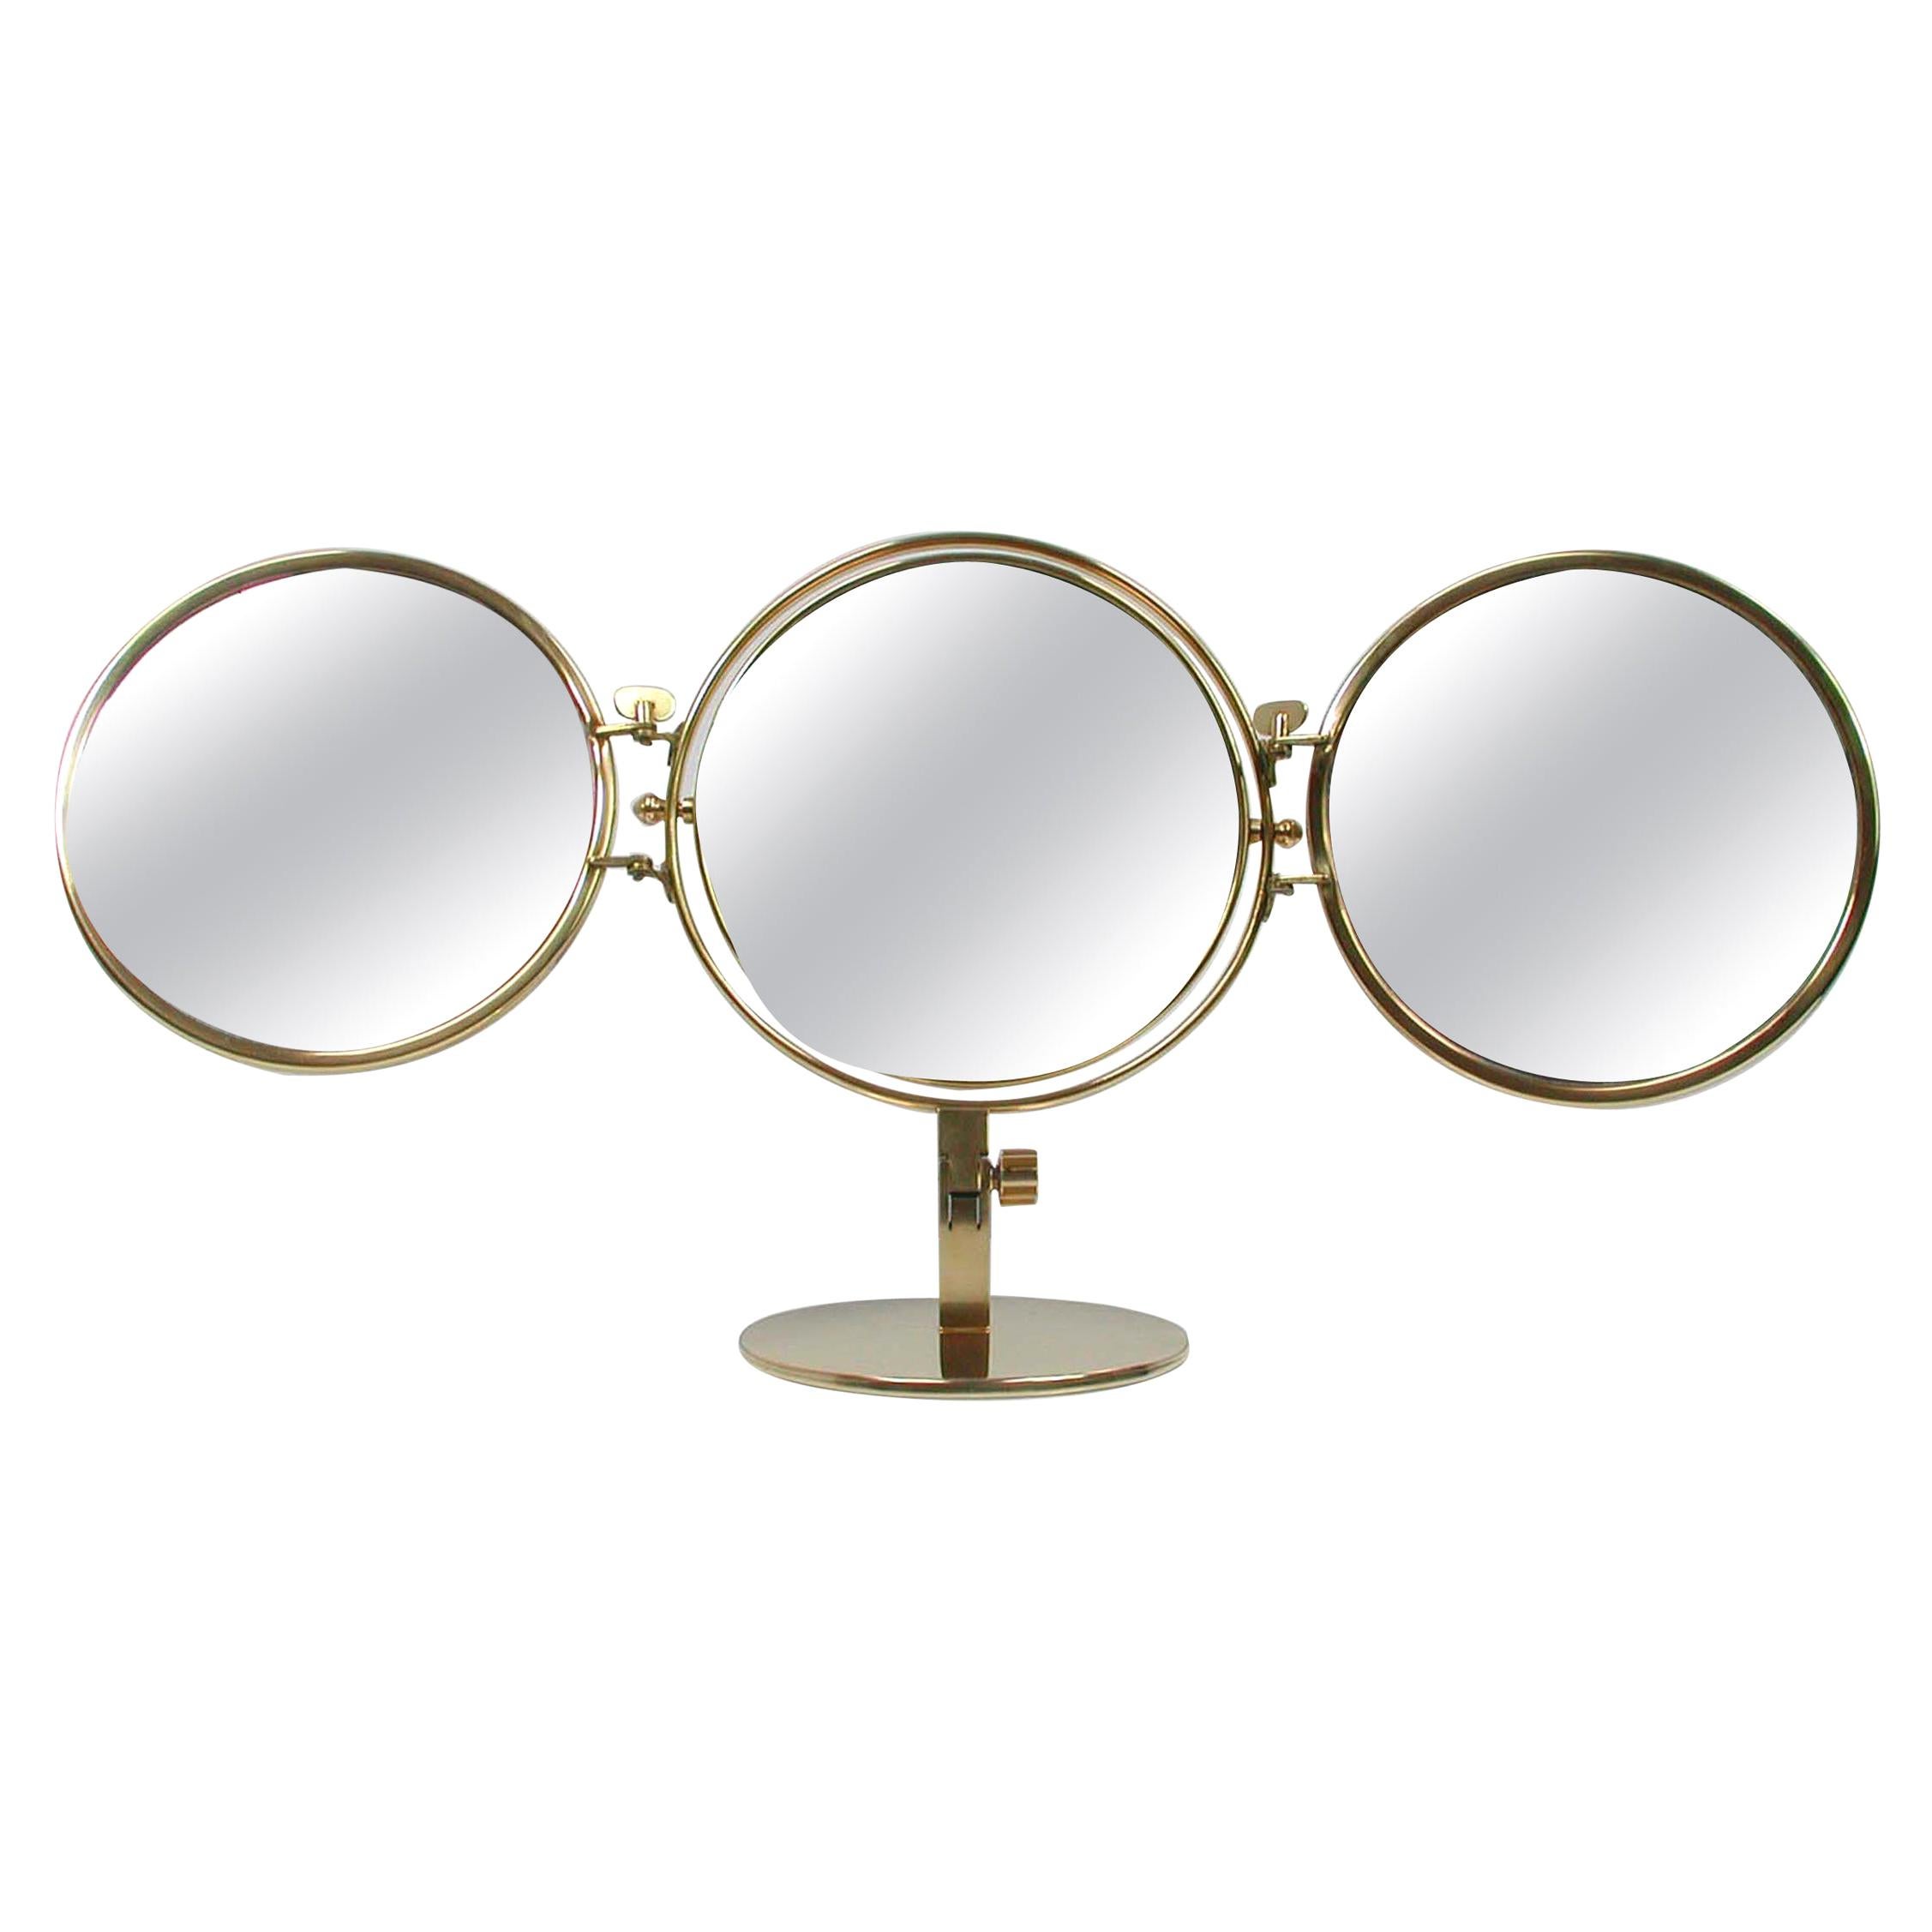 Midcentury Italian Brass Triple Folding Vanity Table Mirror, 1950s